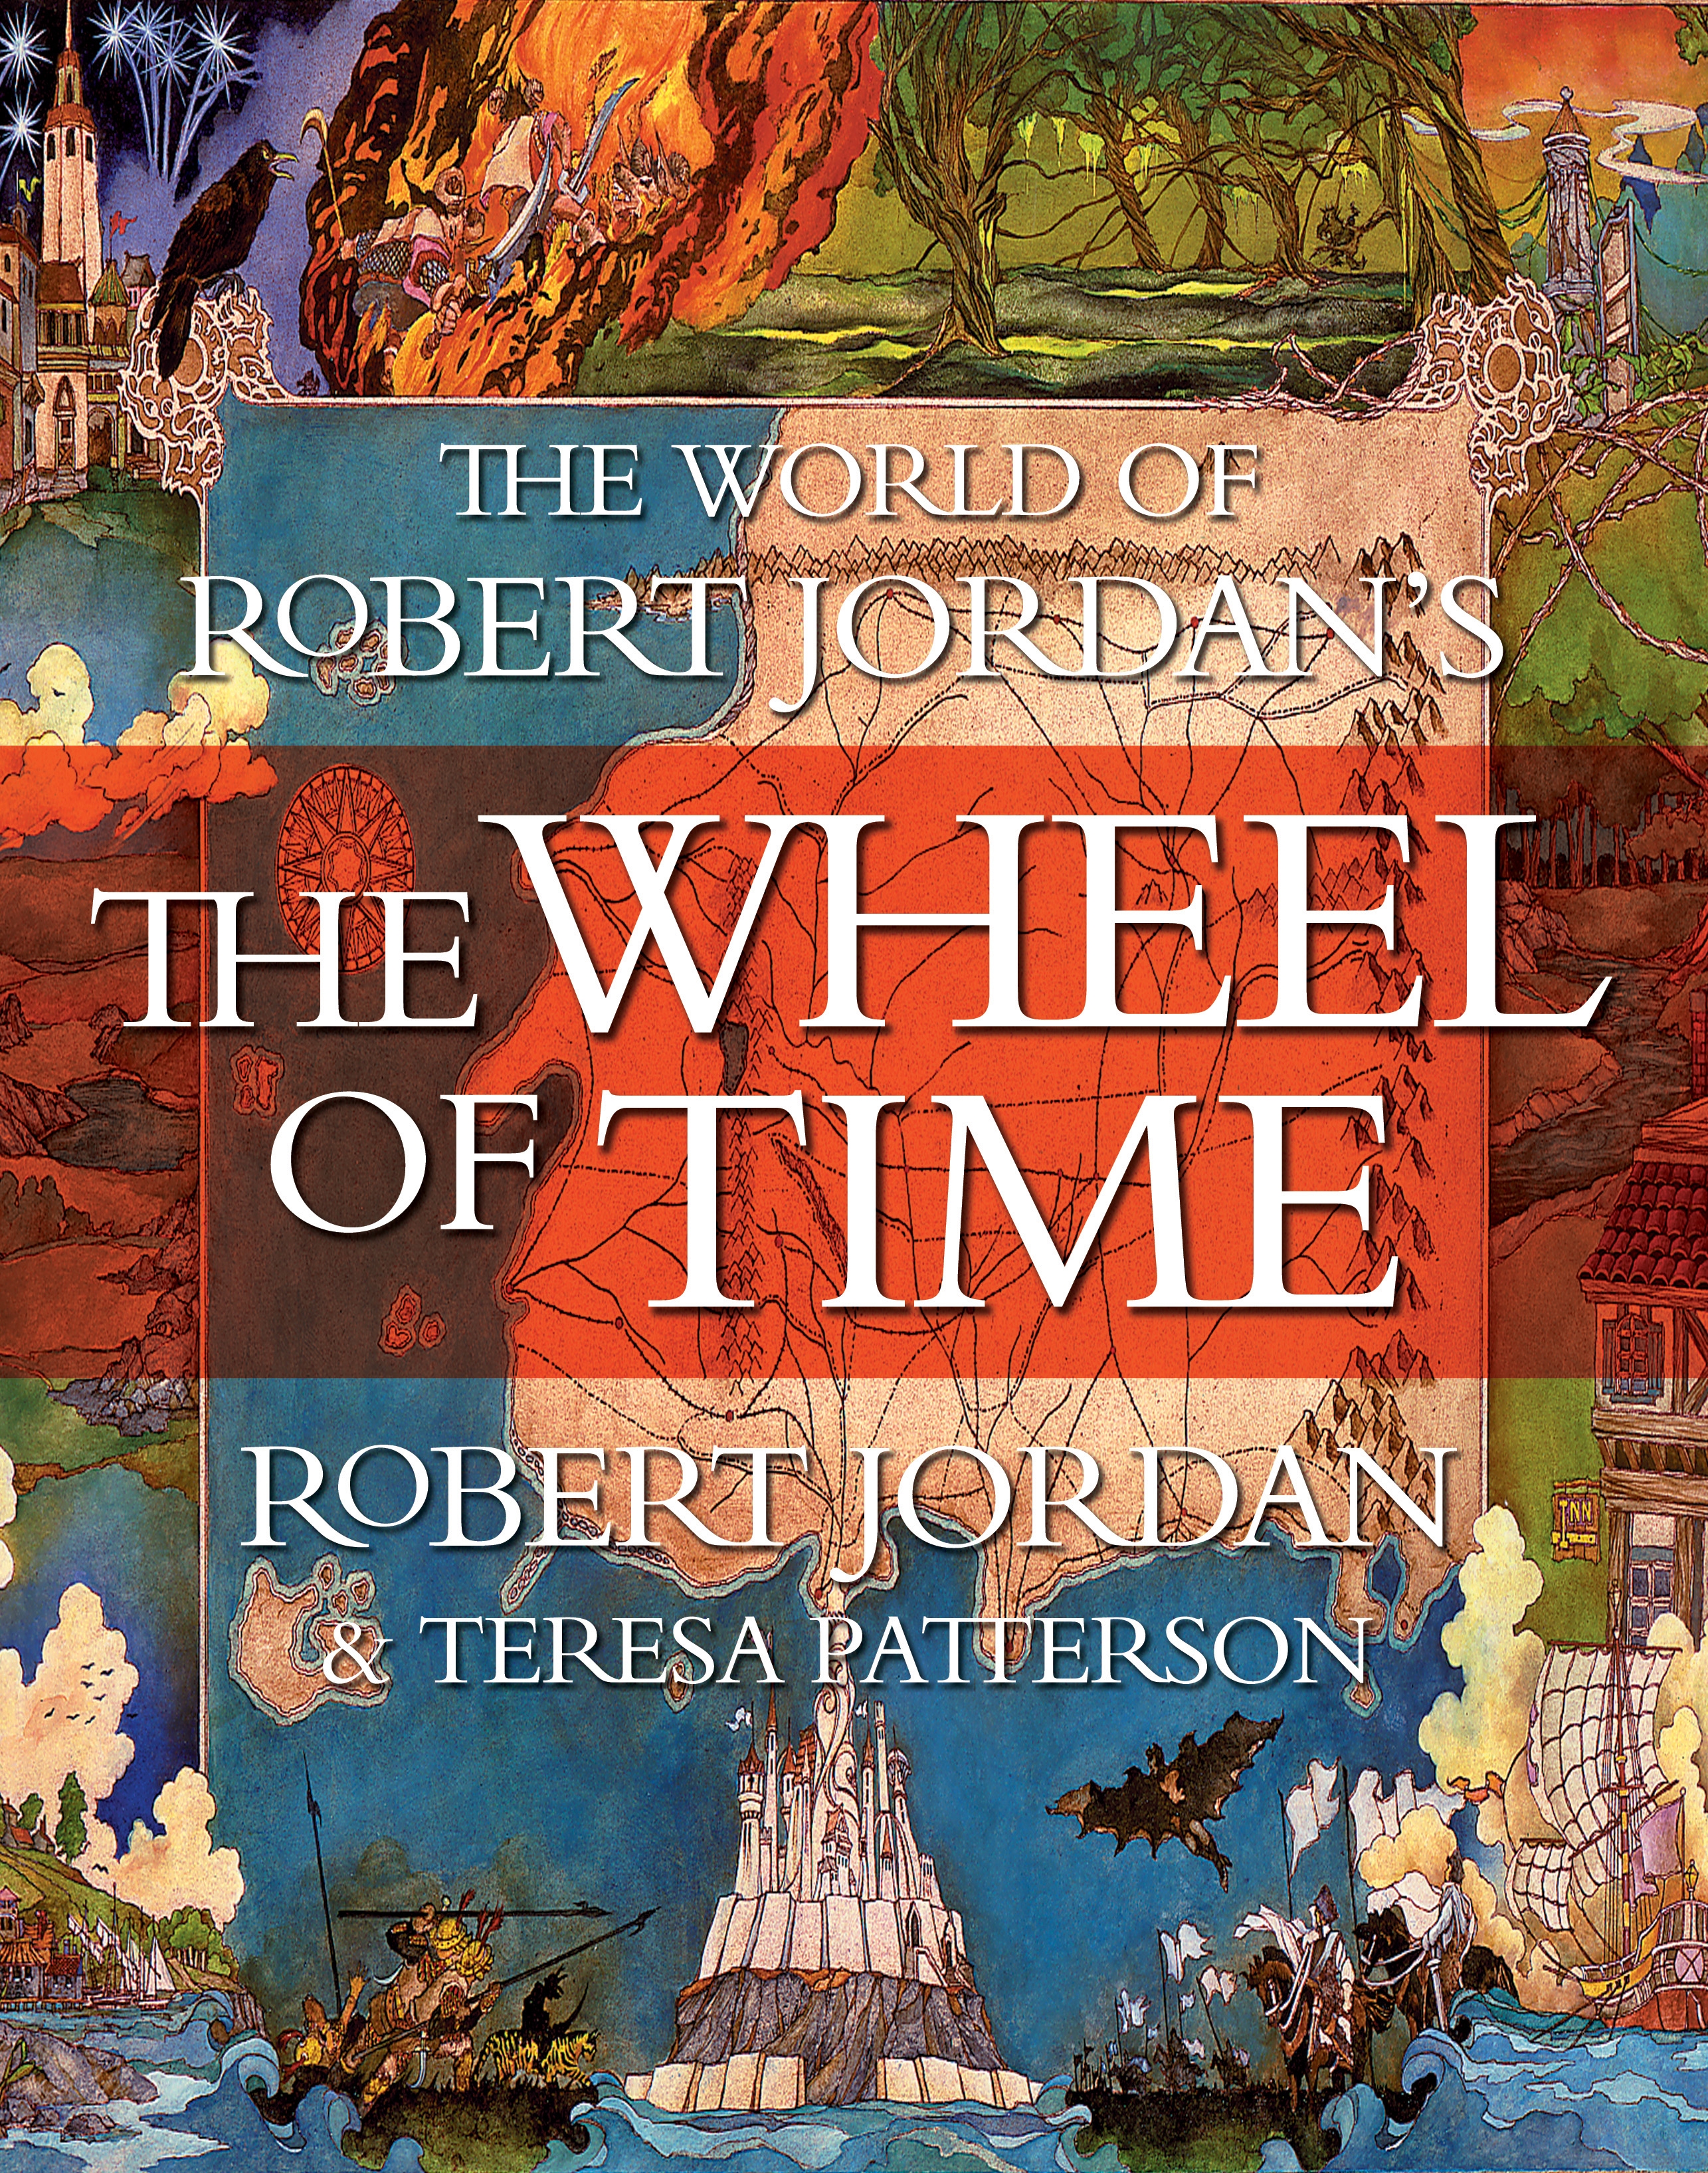 The World of Robert Jordan's The Wheel of Time by Robert Jordan, Teresa Patterson